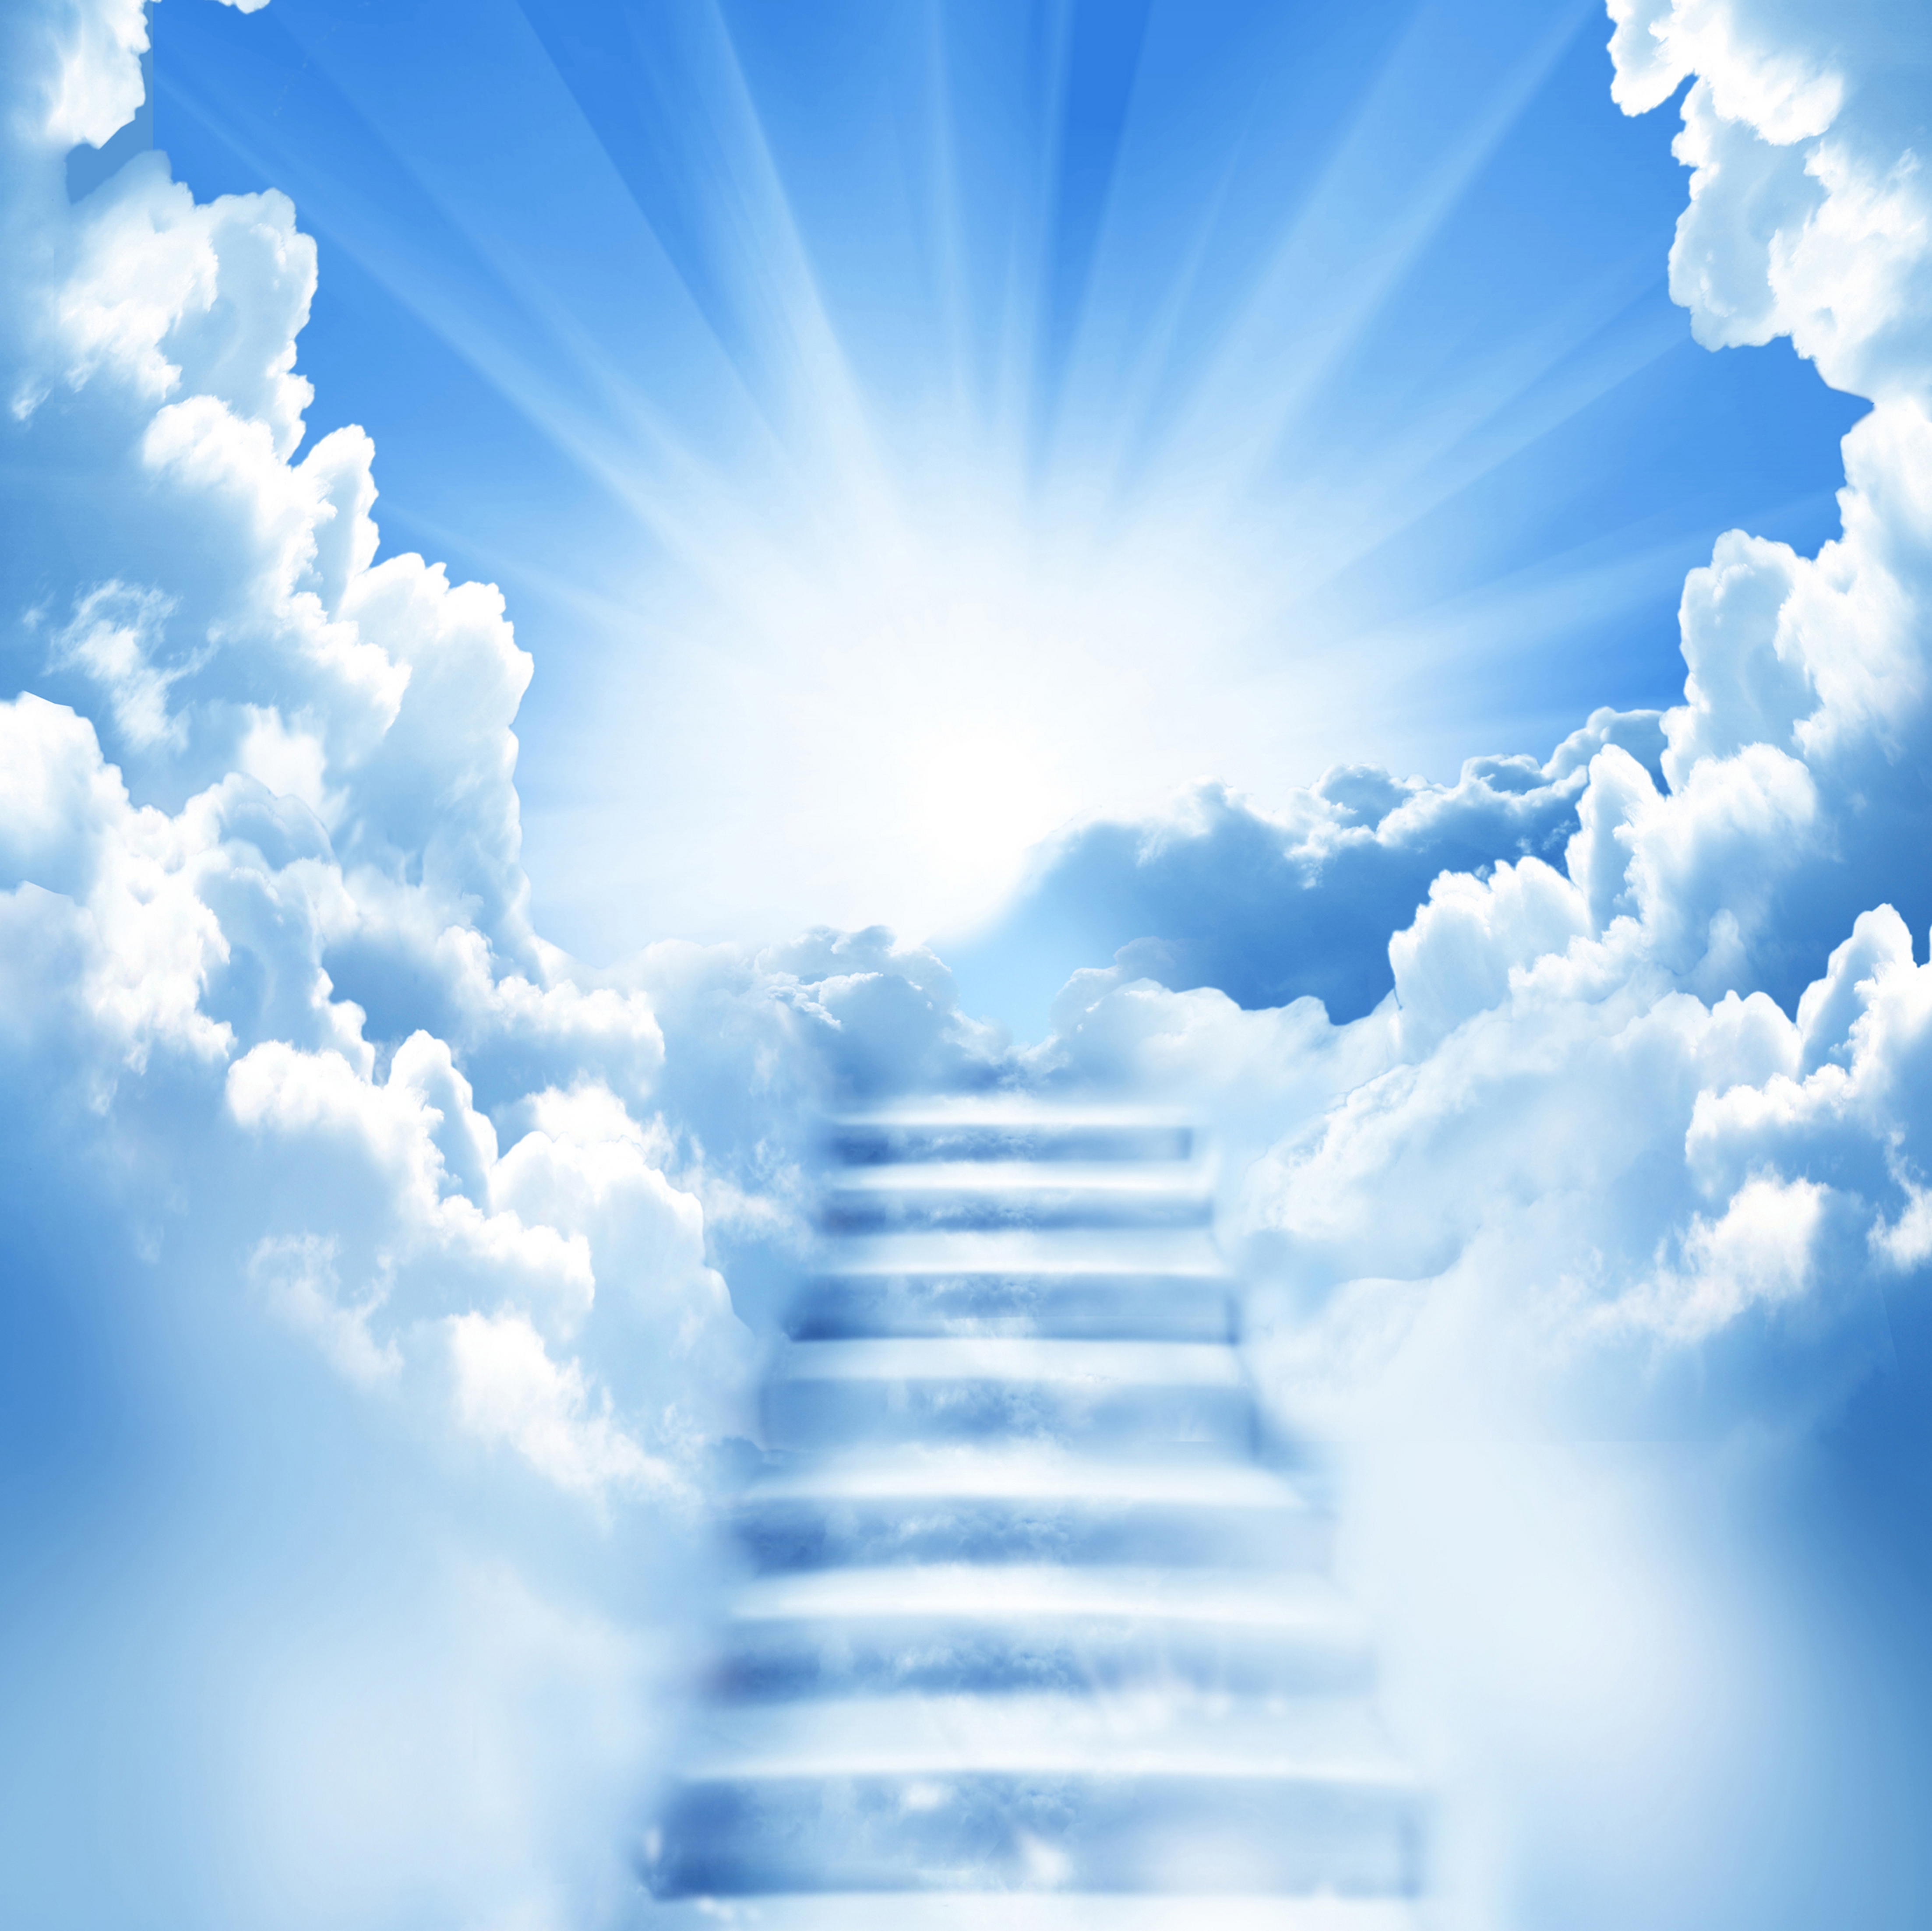 Stairway to heaven wallpaper